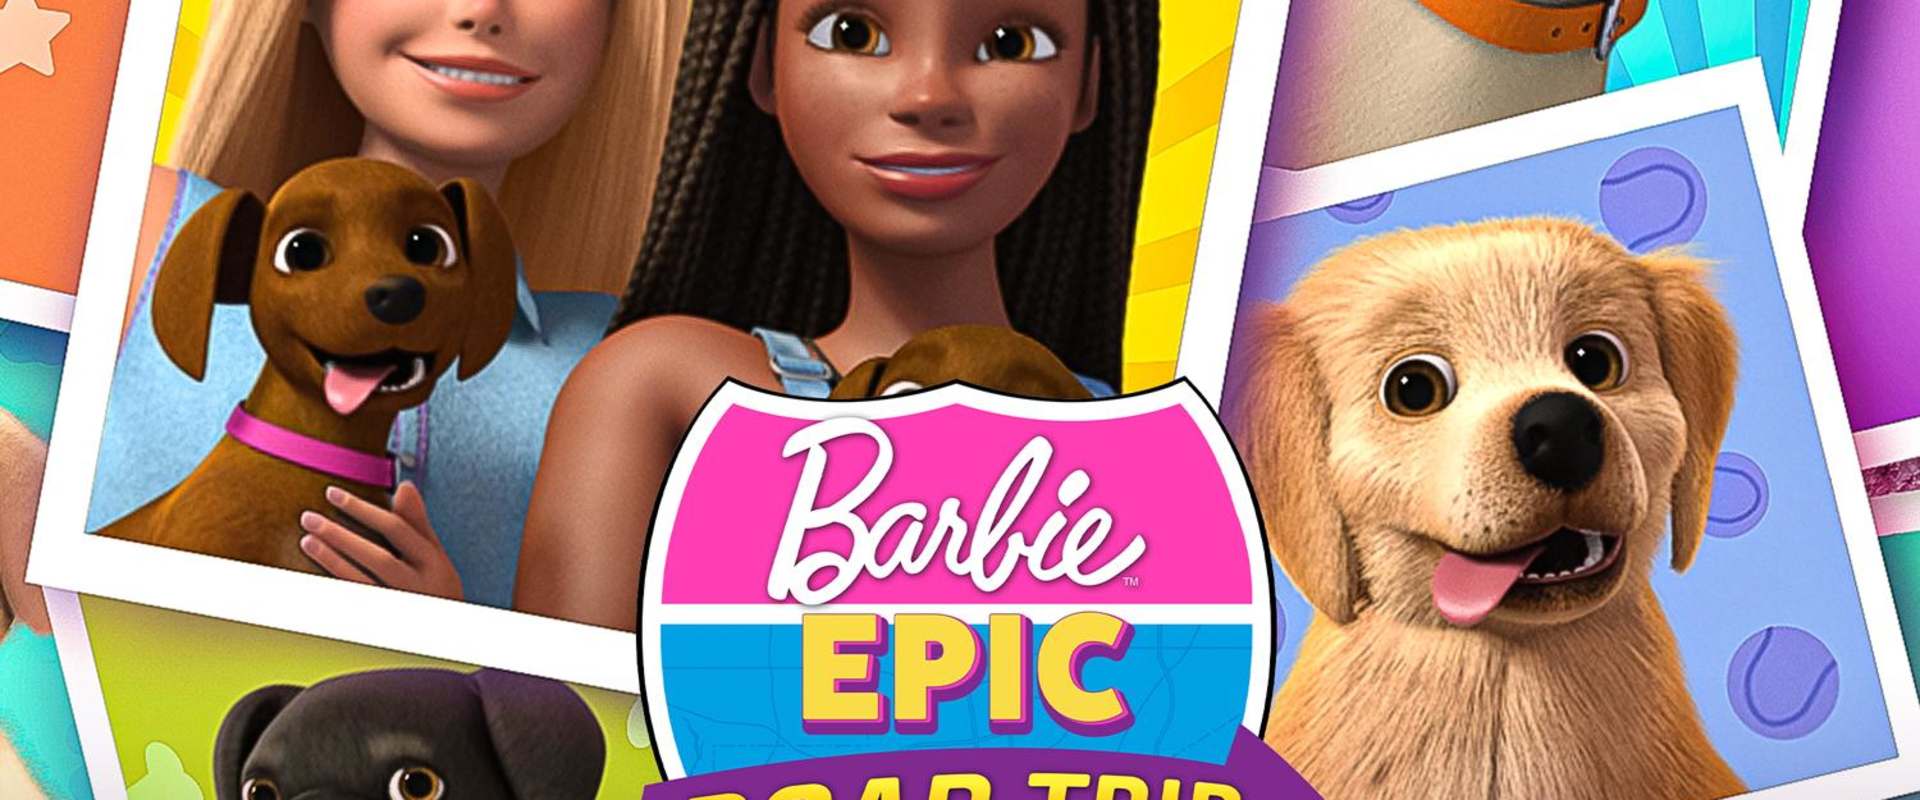 Barbie Epic Road Trip background 1